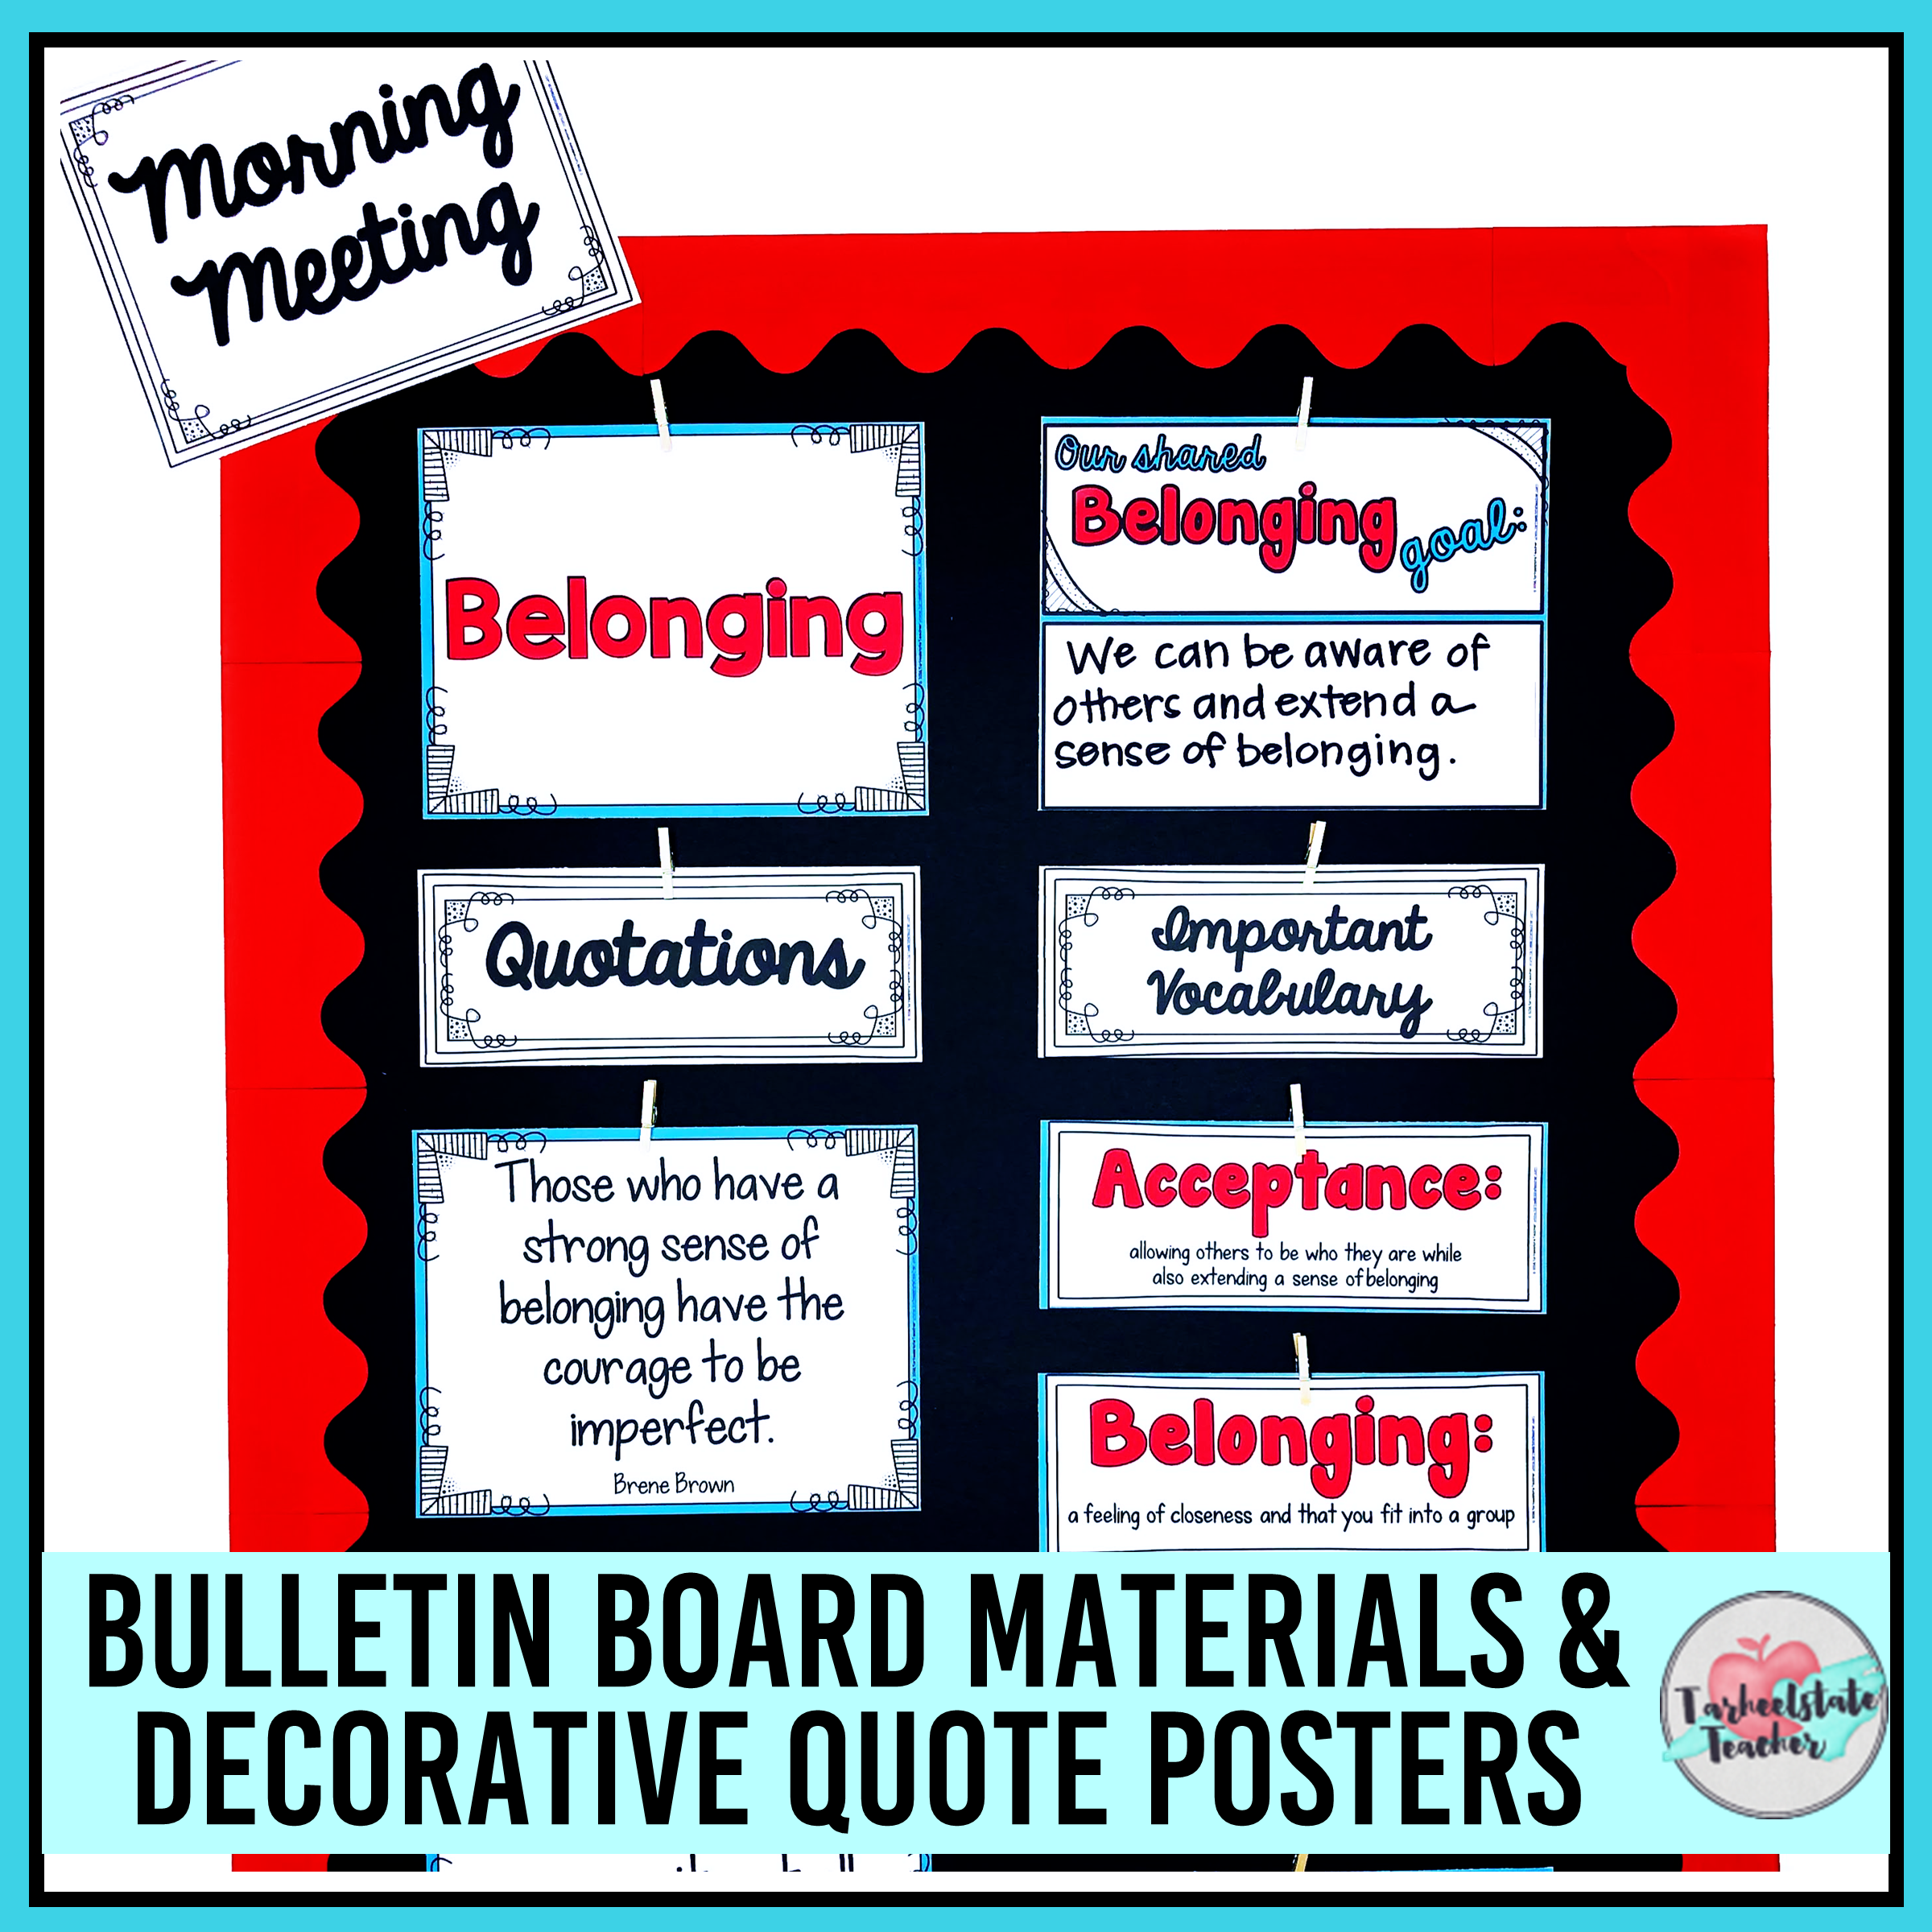 morning meeting bulletin board - belonging (Copy) (Copy) (Copy) (Copy) (Copy)